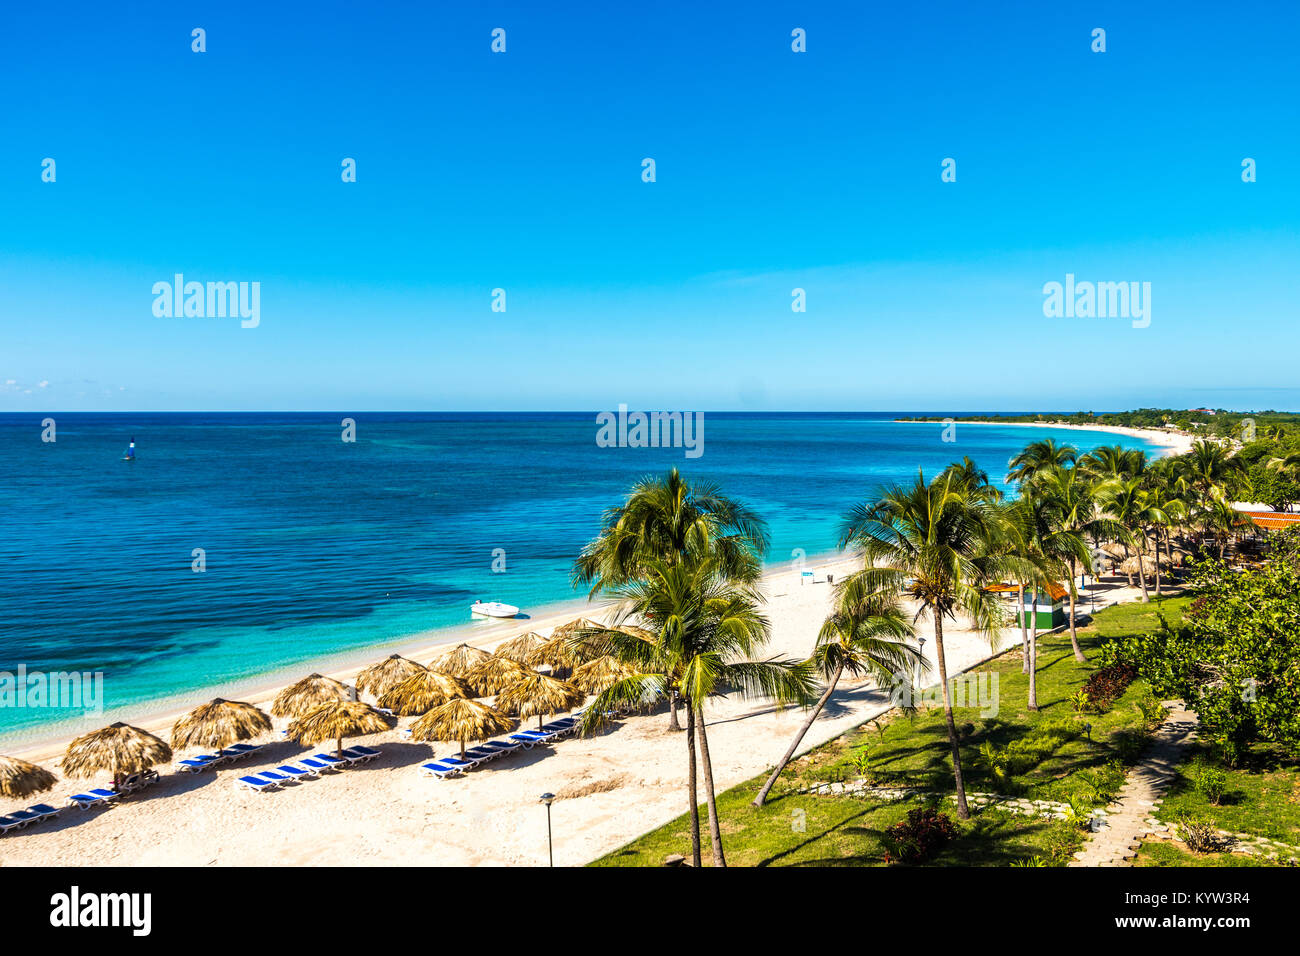 Amazing view of a paradisiac beach in Playa Ancon, palm trees, translucent blue water, straw umbrellas, sun. Stock Photo